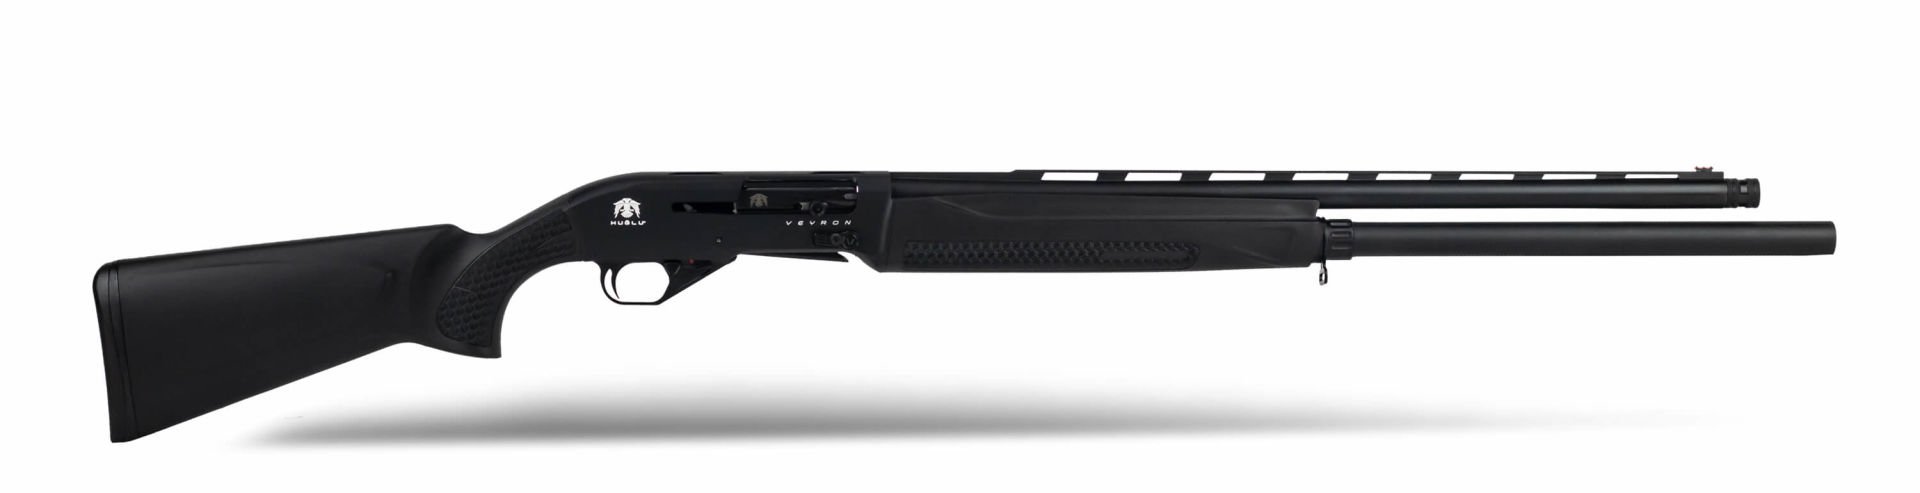 Huğlu Veyron IPSC Otomatik Av Tüfeği